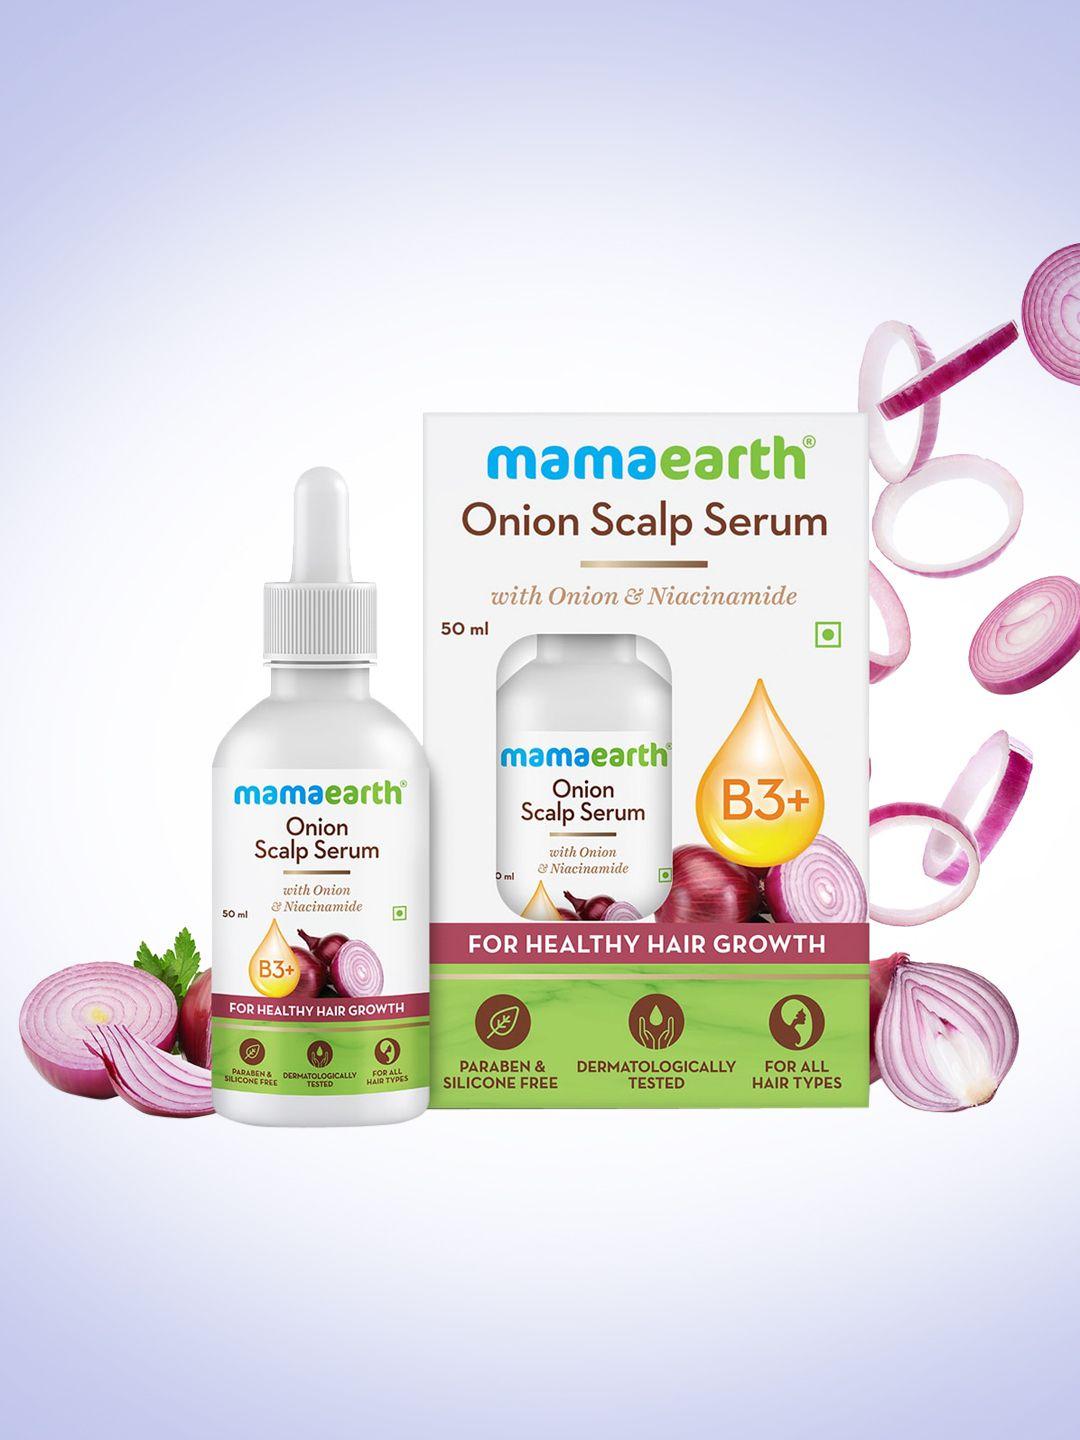 mamaearth onion scalp serum with onion & niacinamide for healthy hair growth 50 ml